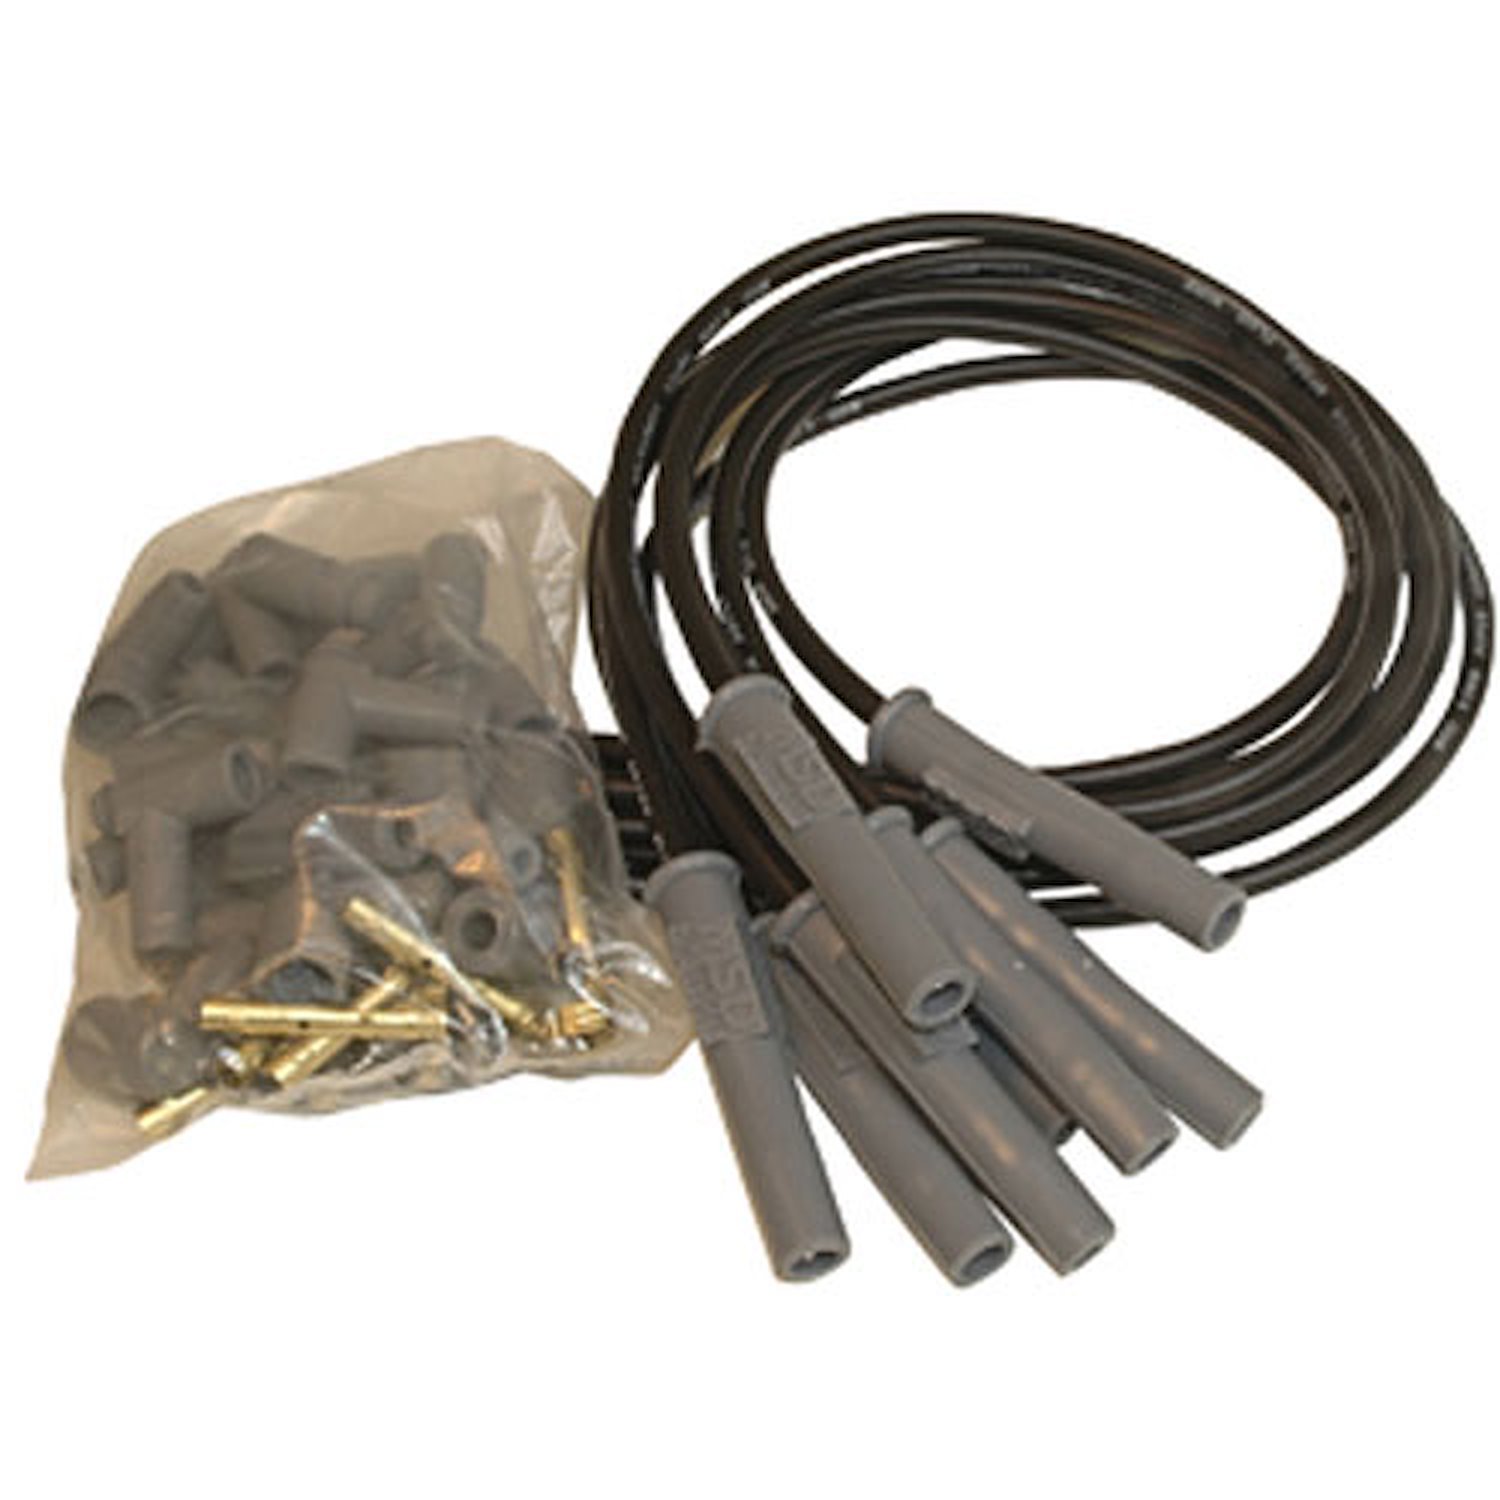 Black 2-in-1 Universal 8.5mm Spark Plug Wire Set